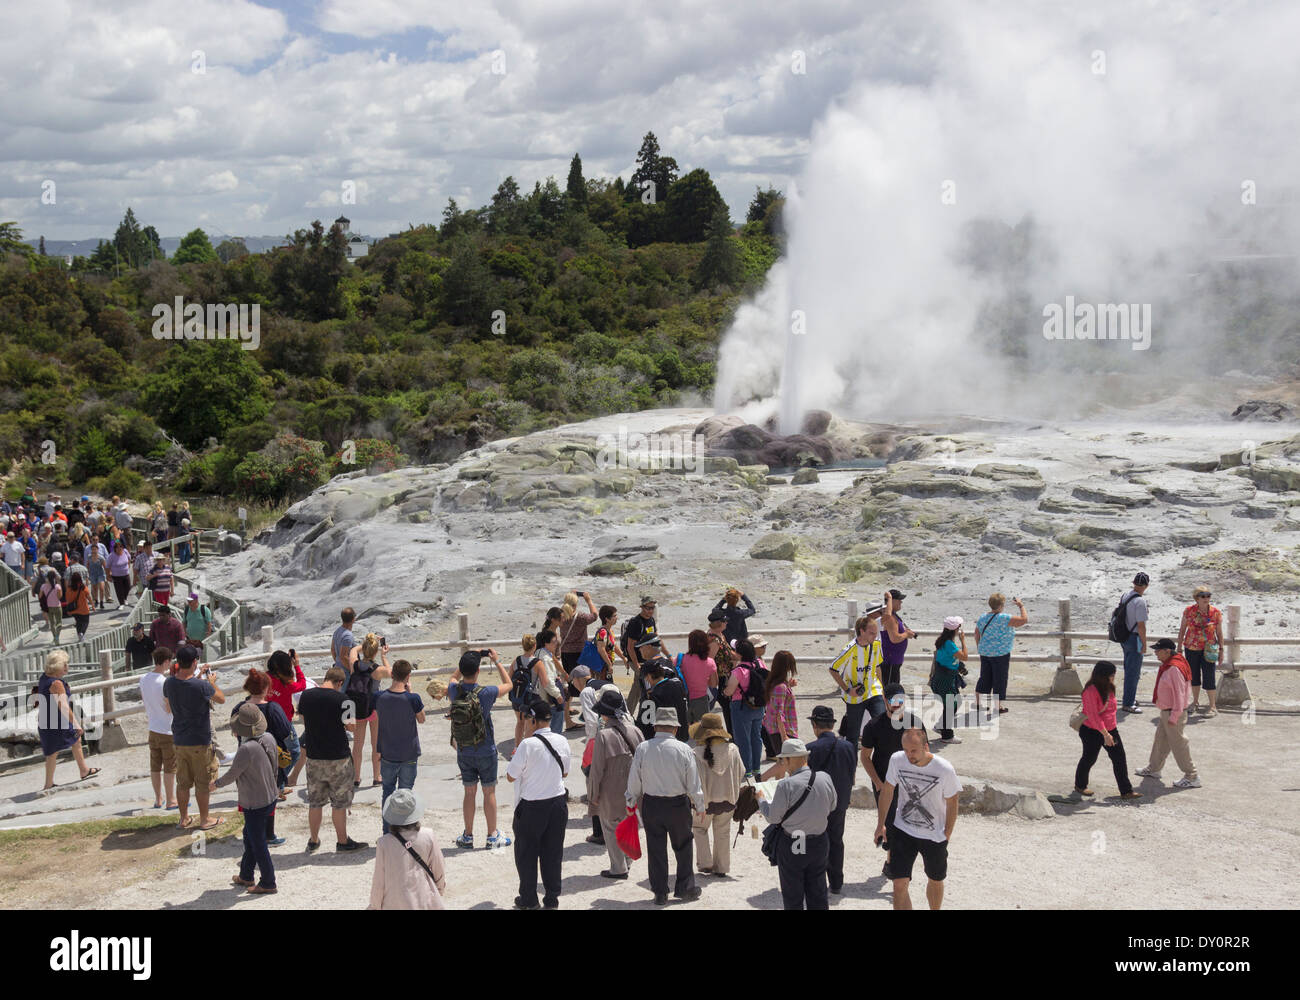 Los turistas observan un géiser en el valle geotermal Whakarewarewa, Rotorua, Nueva Zelanda Foto de stock